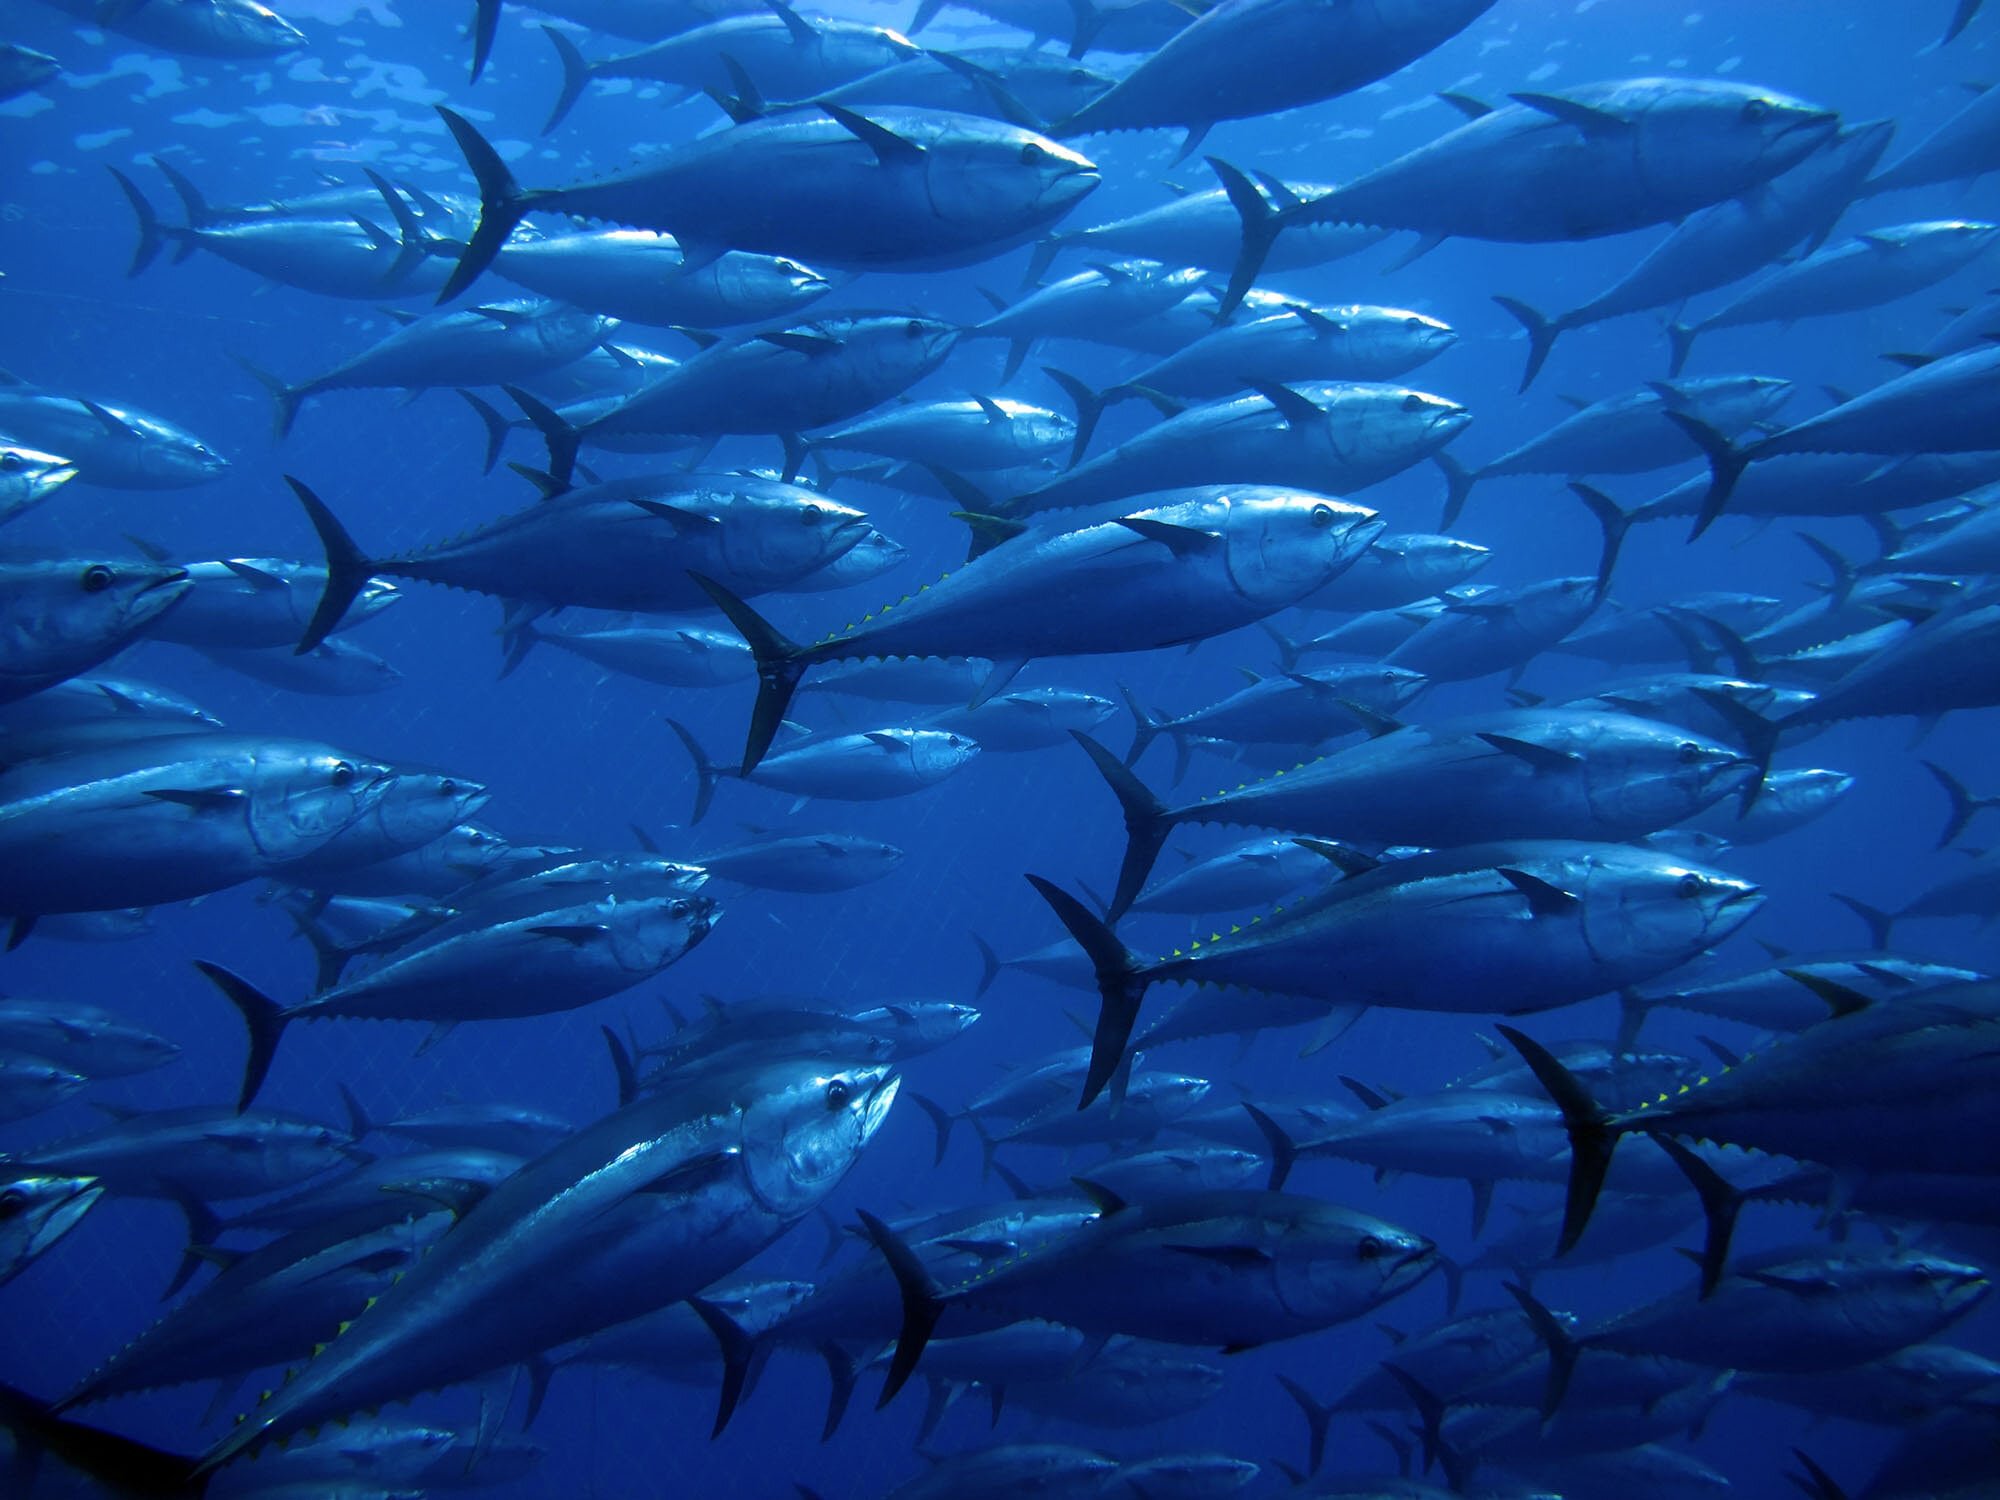 Bigeye tuna fishing capture the imagination - Anglers Journal - A Fishing  Life